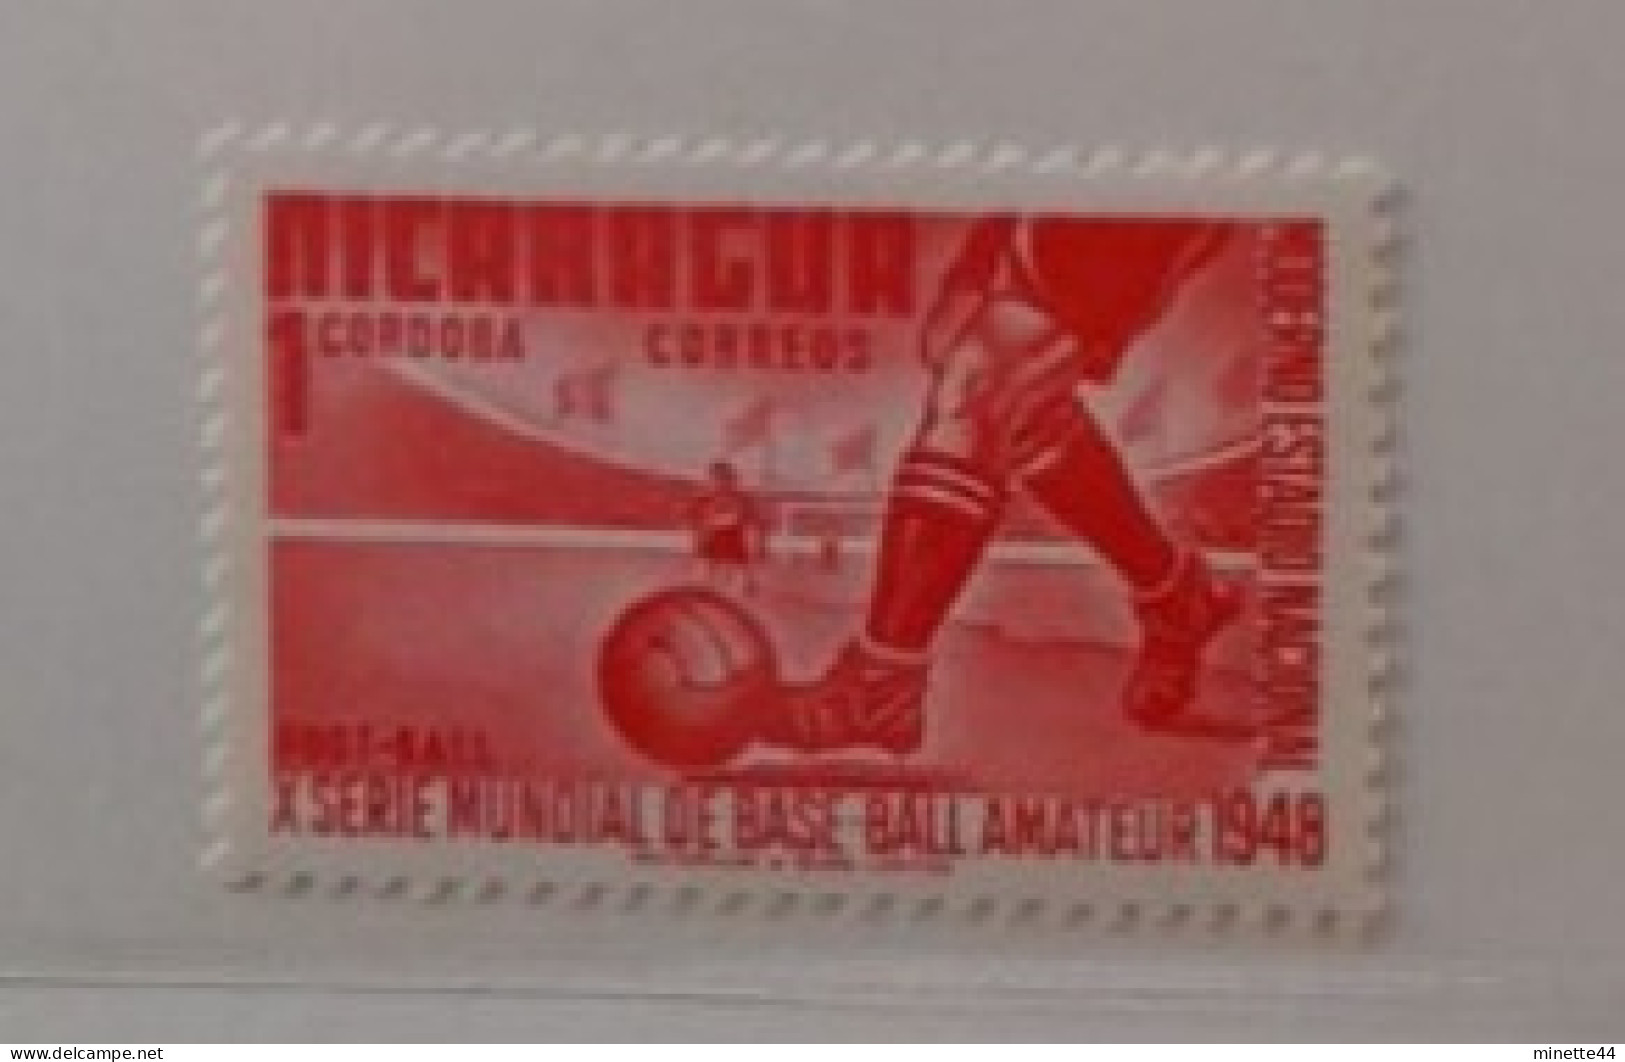 NICARAGUA 1949 STADIUM  MNH** FOOTBALL FUSSBALL SOCCER CALCIO VOETBAL FUTBOL FUTEBOL FOOT FOTBAL - Unused Stamps